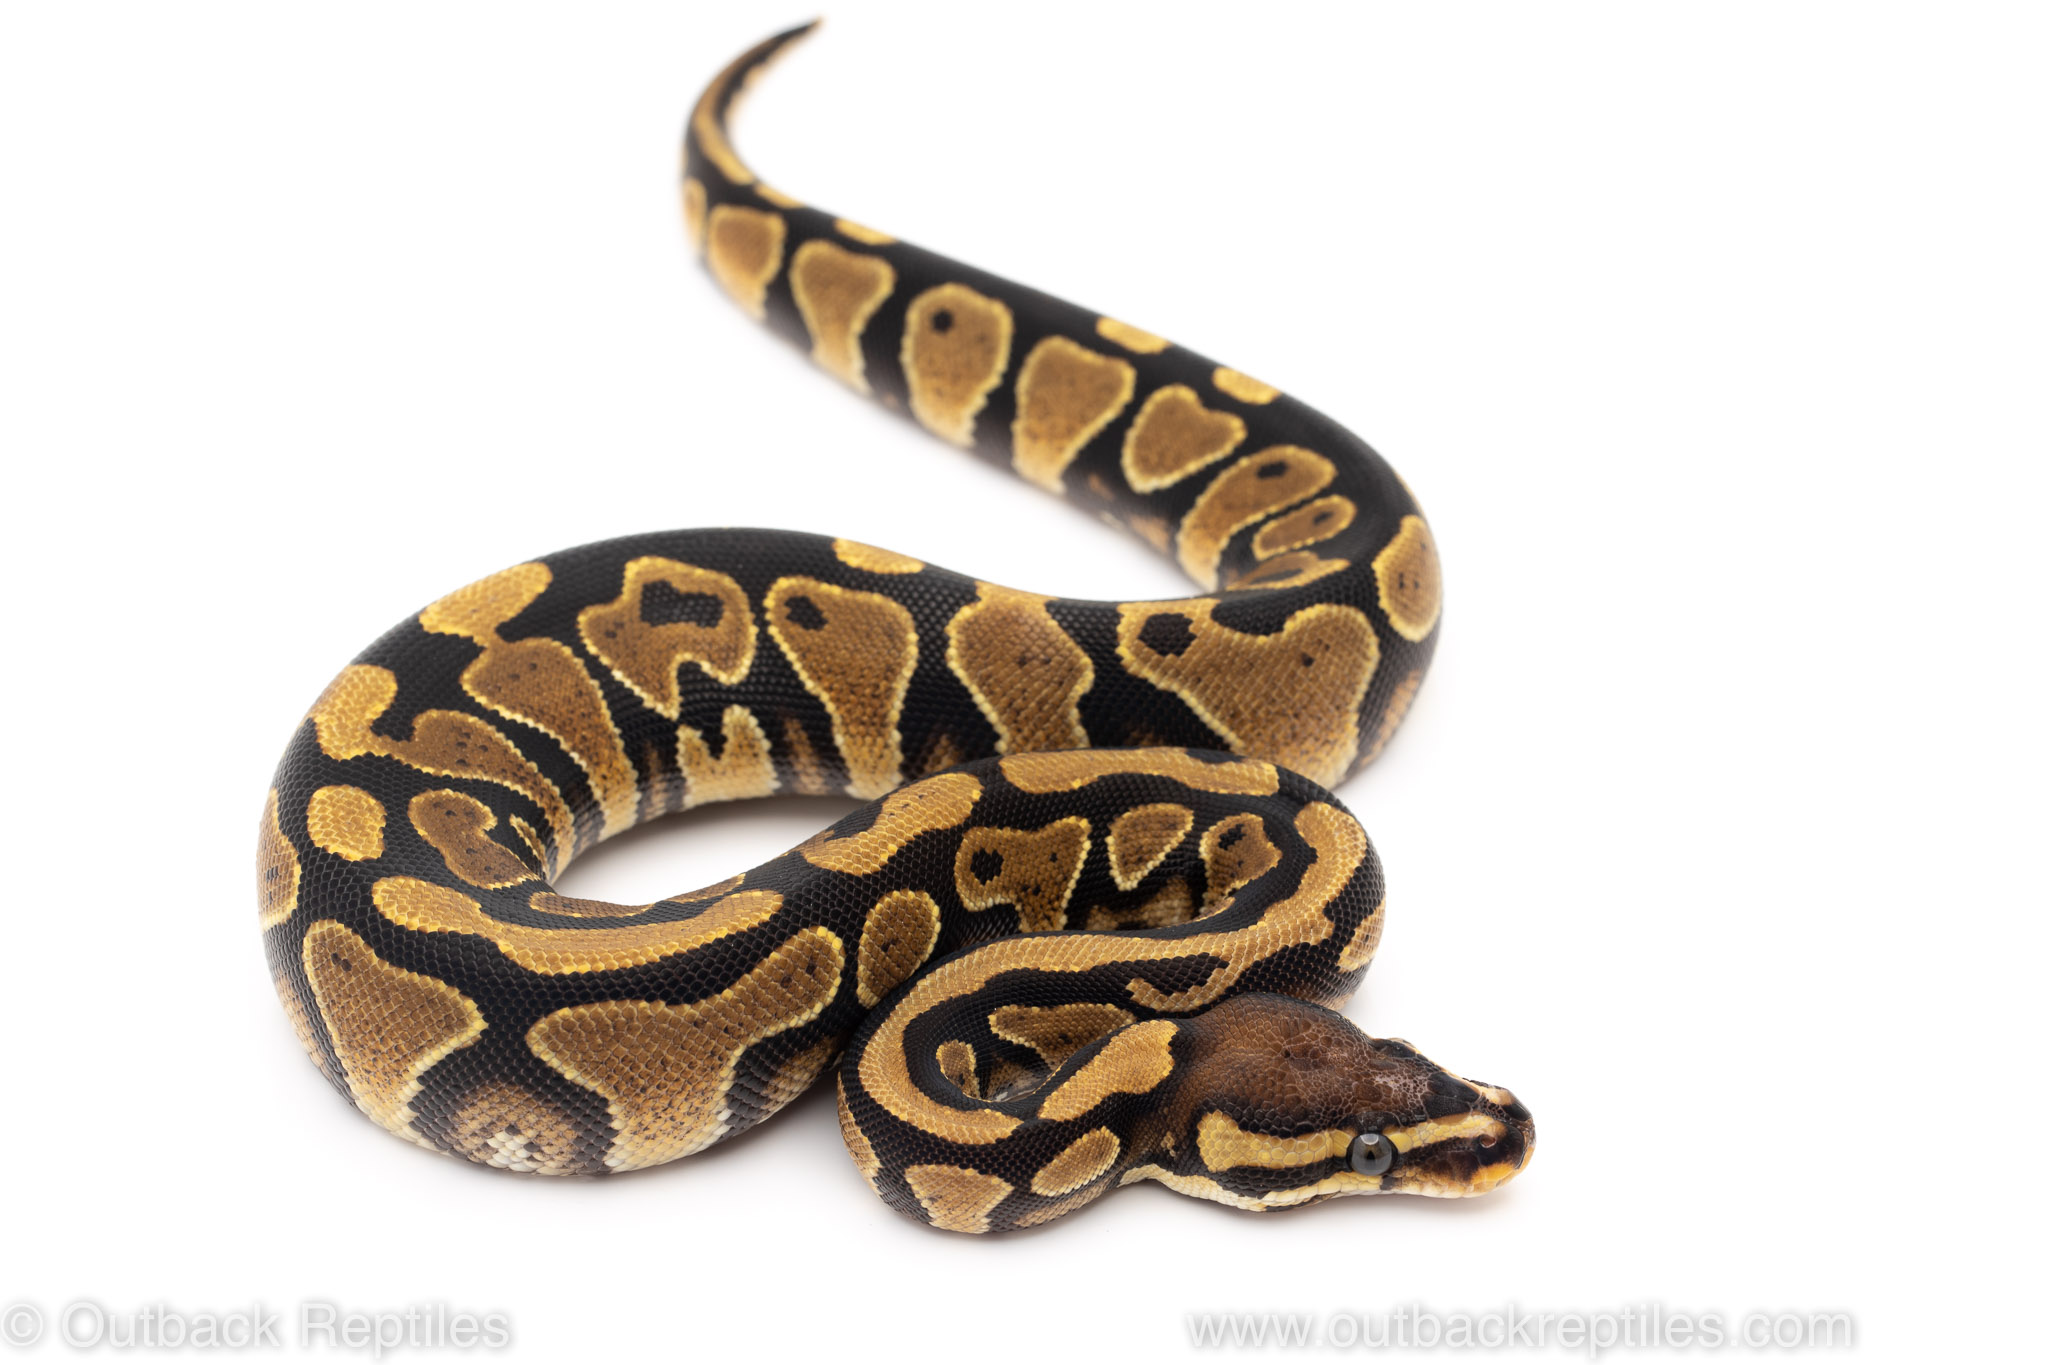 scaleless ball python for sale